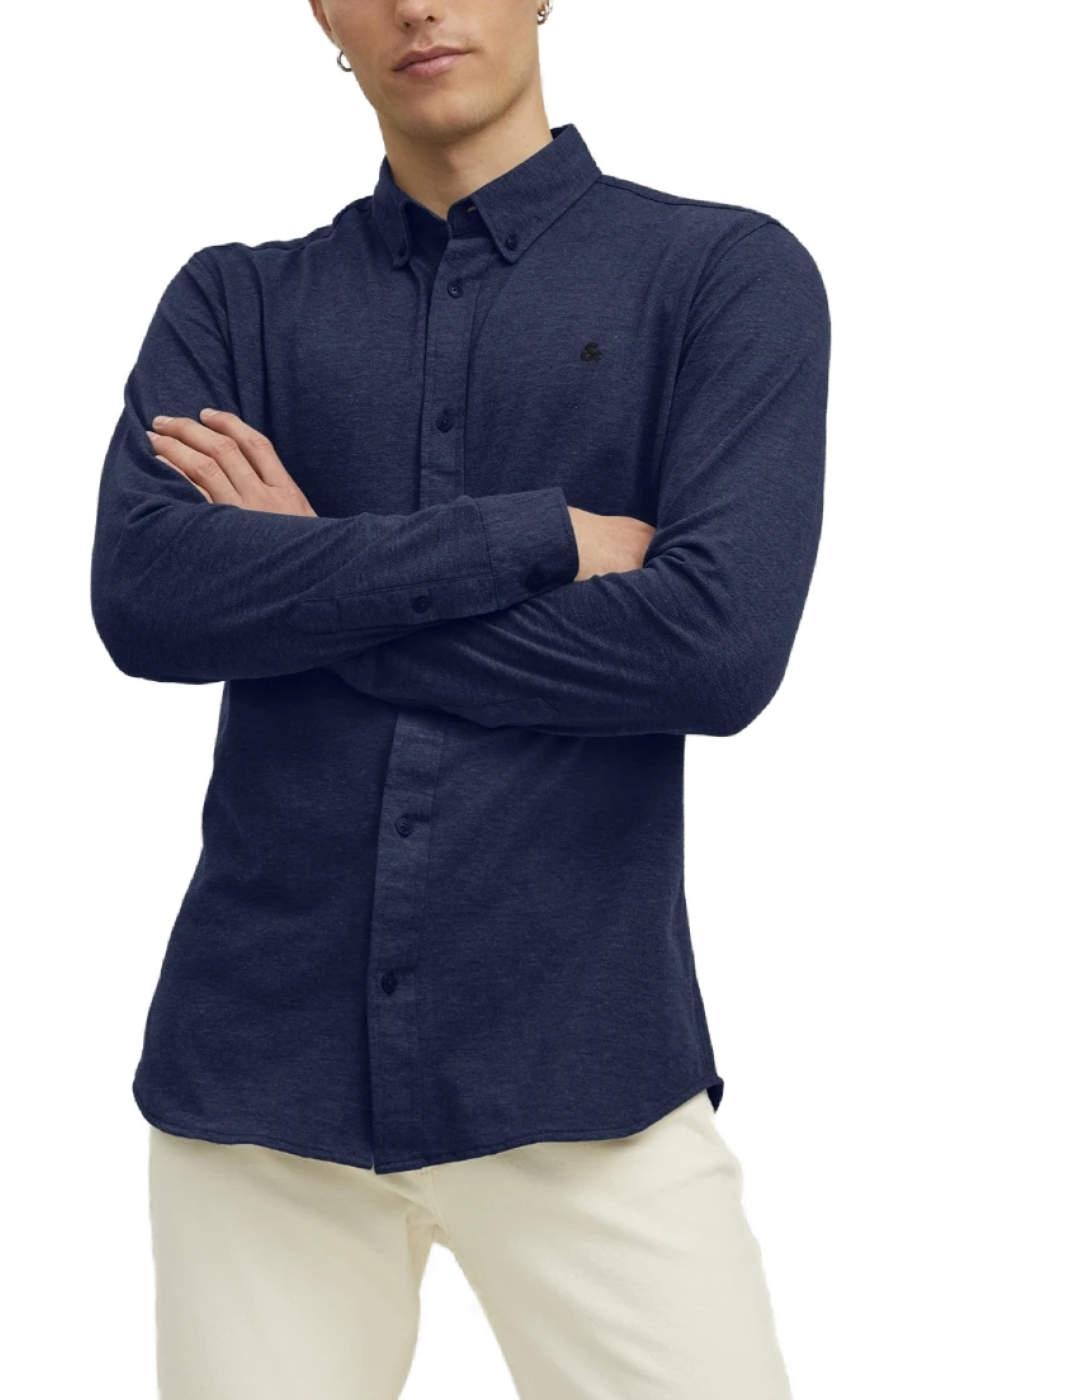 Camisa Jack&Jones Pique azul marino slim fit de hombre